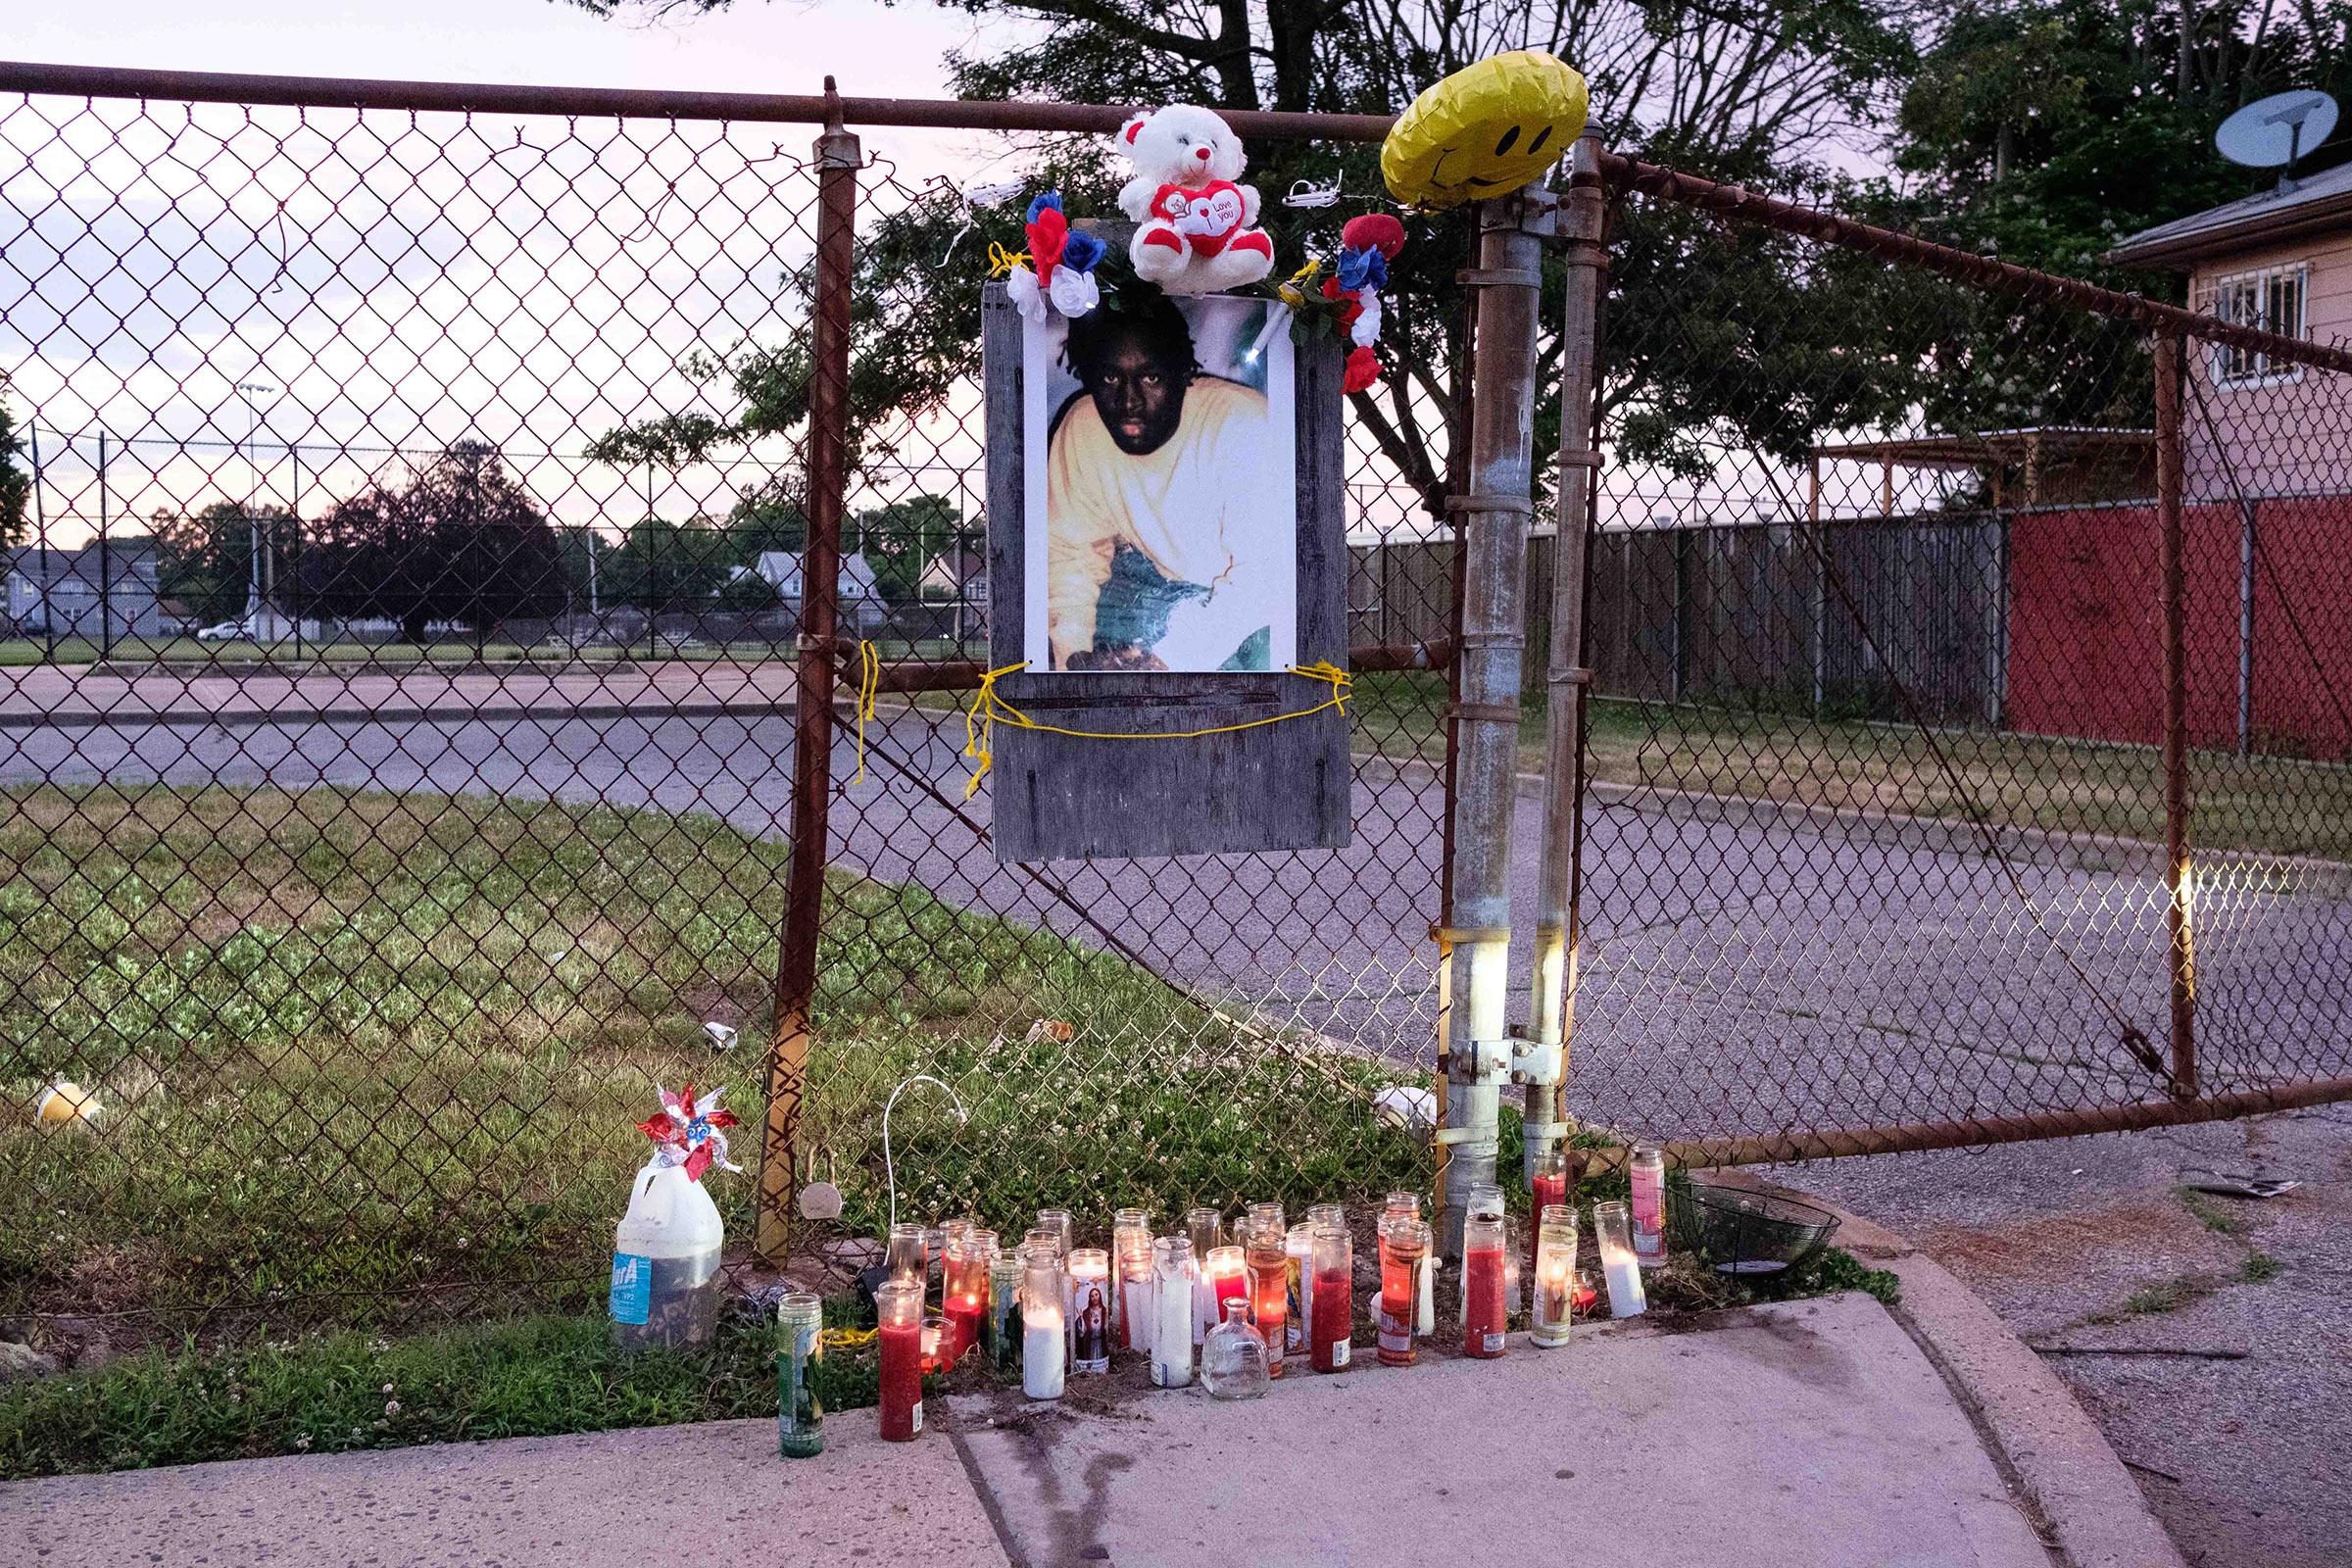 A memorial, in honor of Jamel Floyd, is placed at Kennedy Memorial Park in Hempstead, N.Y., where Jamel grew up playing baseball. (Yuki Iwamura)